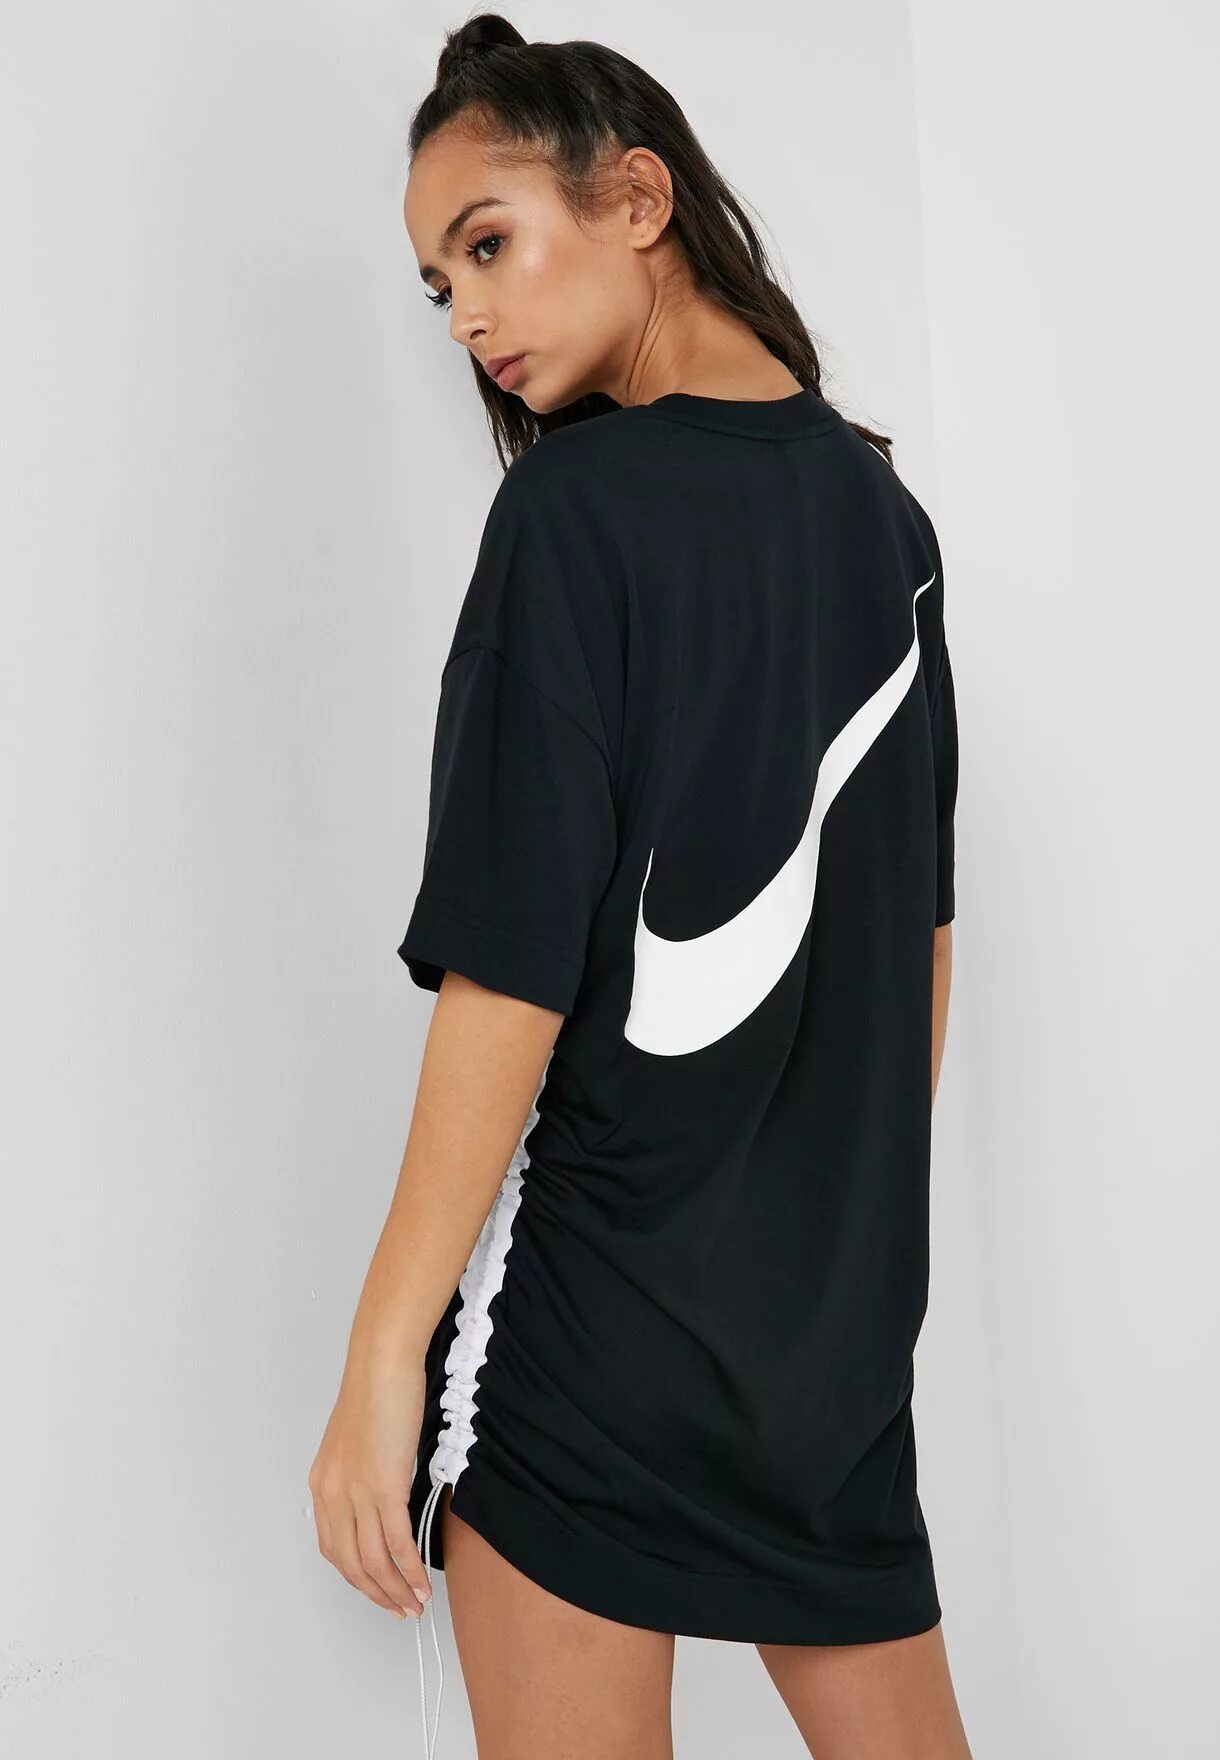 Платье найк. Платье Nike Swoosh. Nike Sportswear Swoosh женское платье. Спортивное платье найк. Платье футболка Nike.